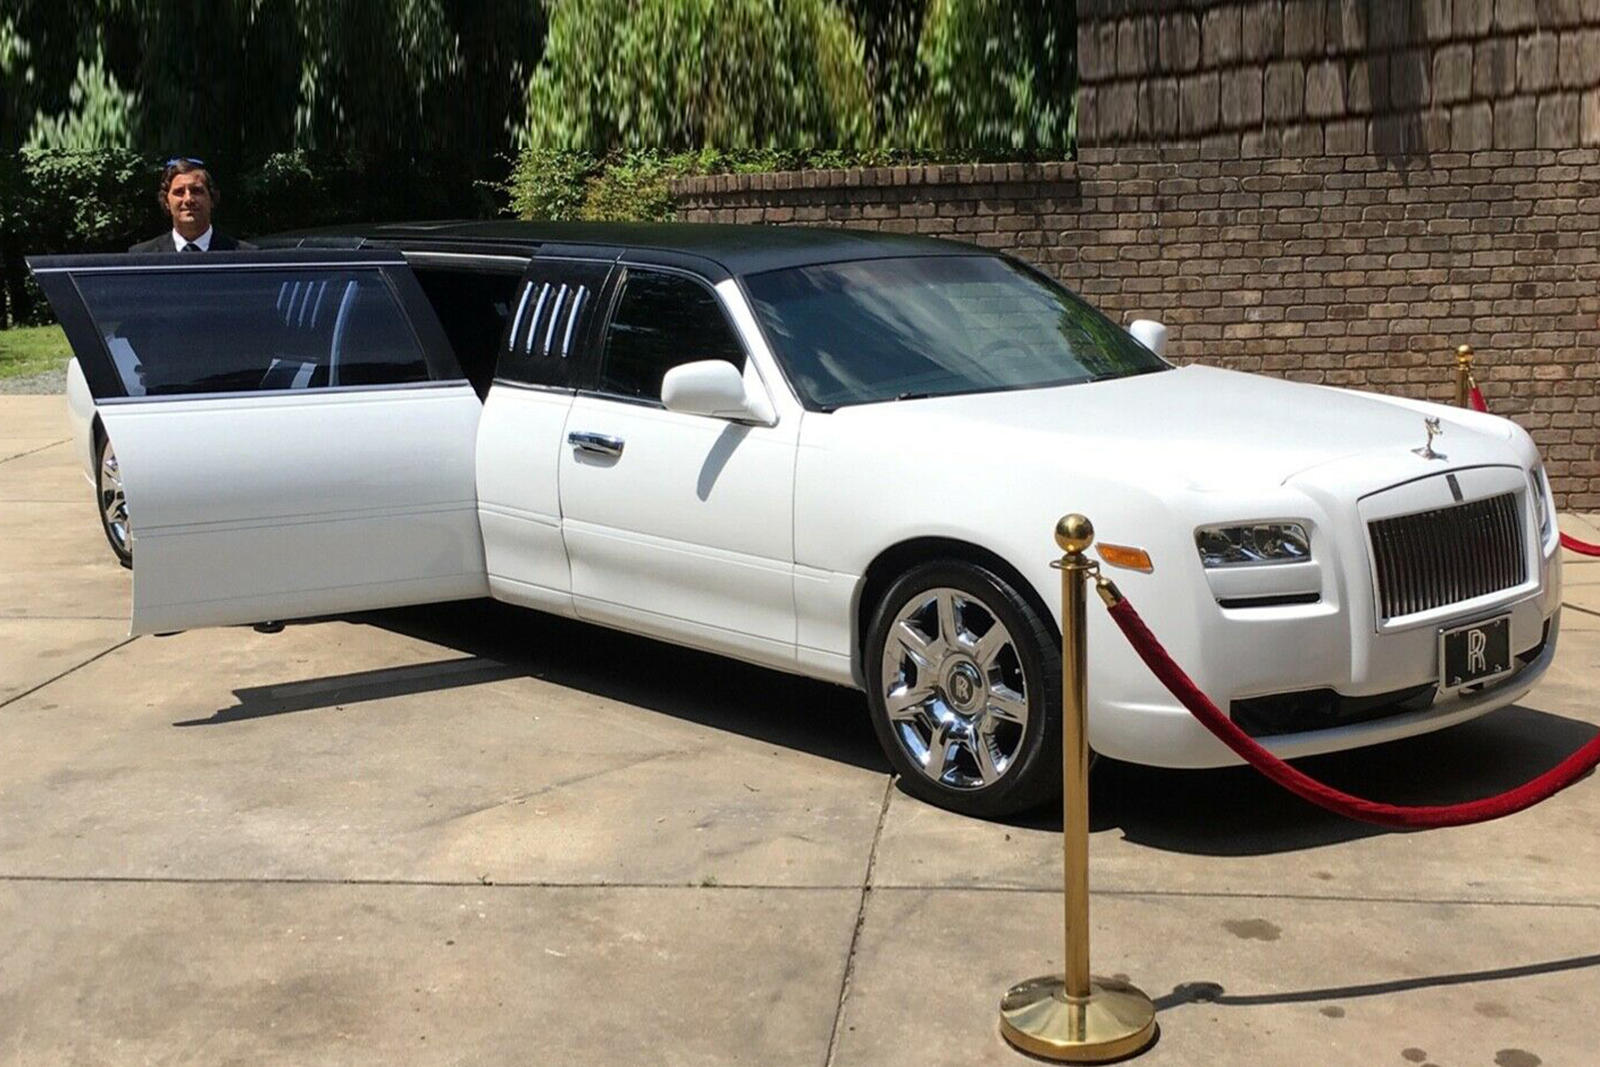 Silver Rolls Royce Phantom for Prom  Picture of JD Prestige Cars London   Tripadvisor